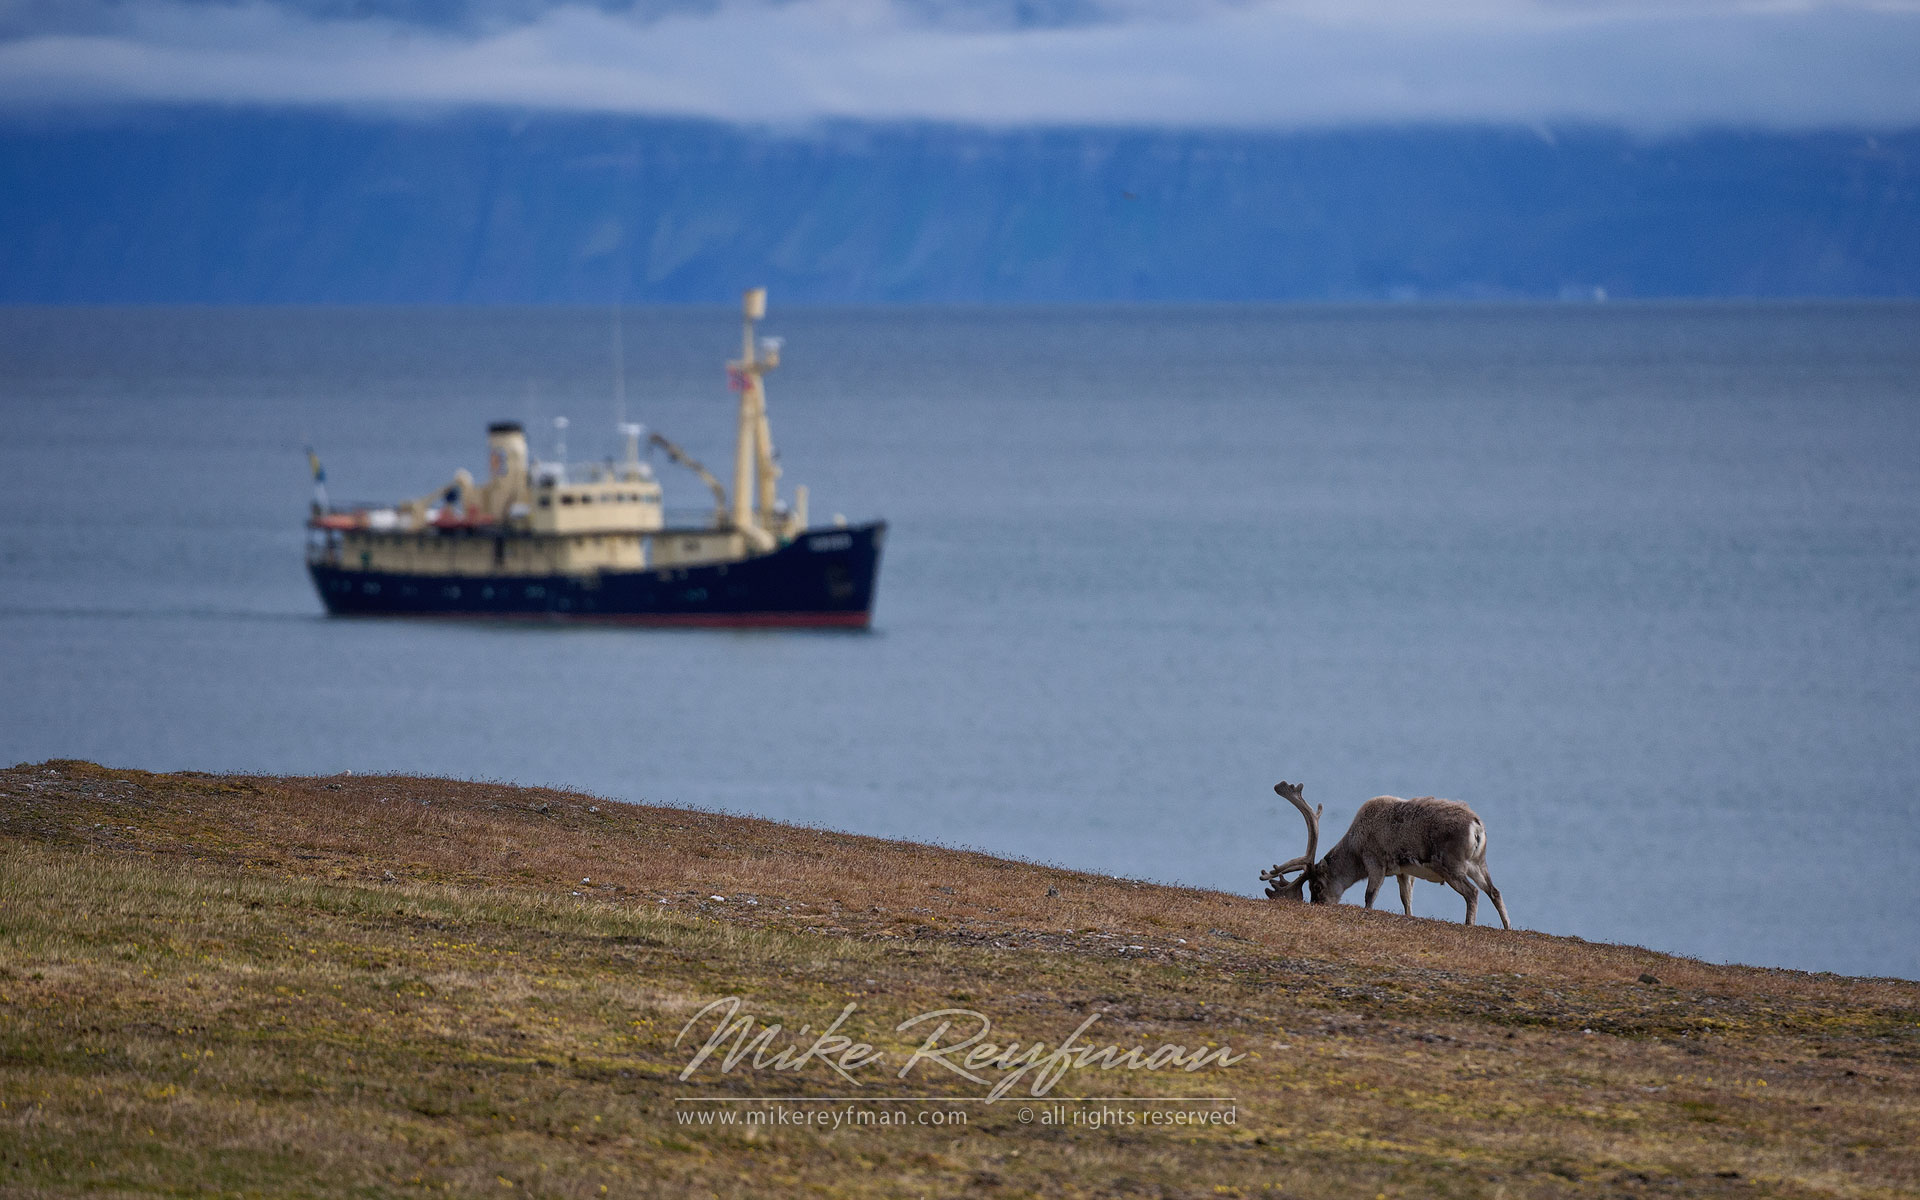 Svalbard Reindeer (Rangifer tarandus platyrhynchus) grazing. Alkehornet, Svalbard (Spitsbergen) Archipelago, Norway. - Wildlife-Svalbard-Spitsbergen-Norway - Mike Reyfman Photography